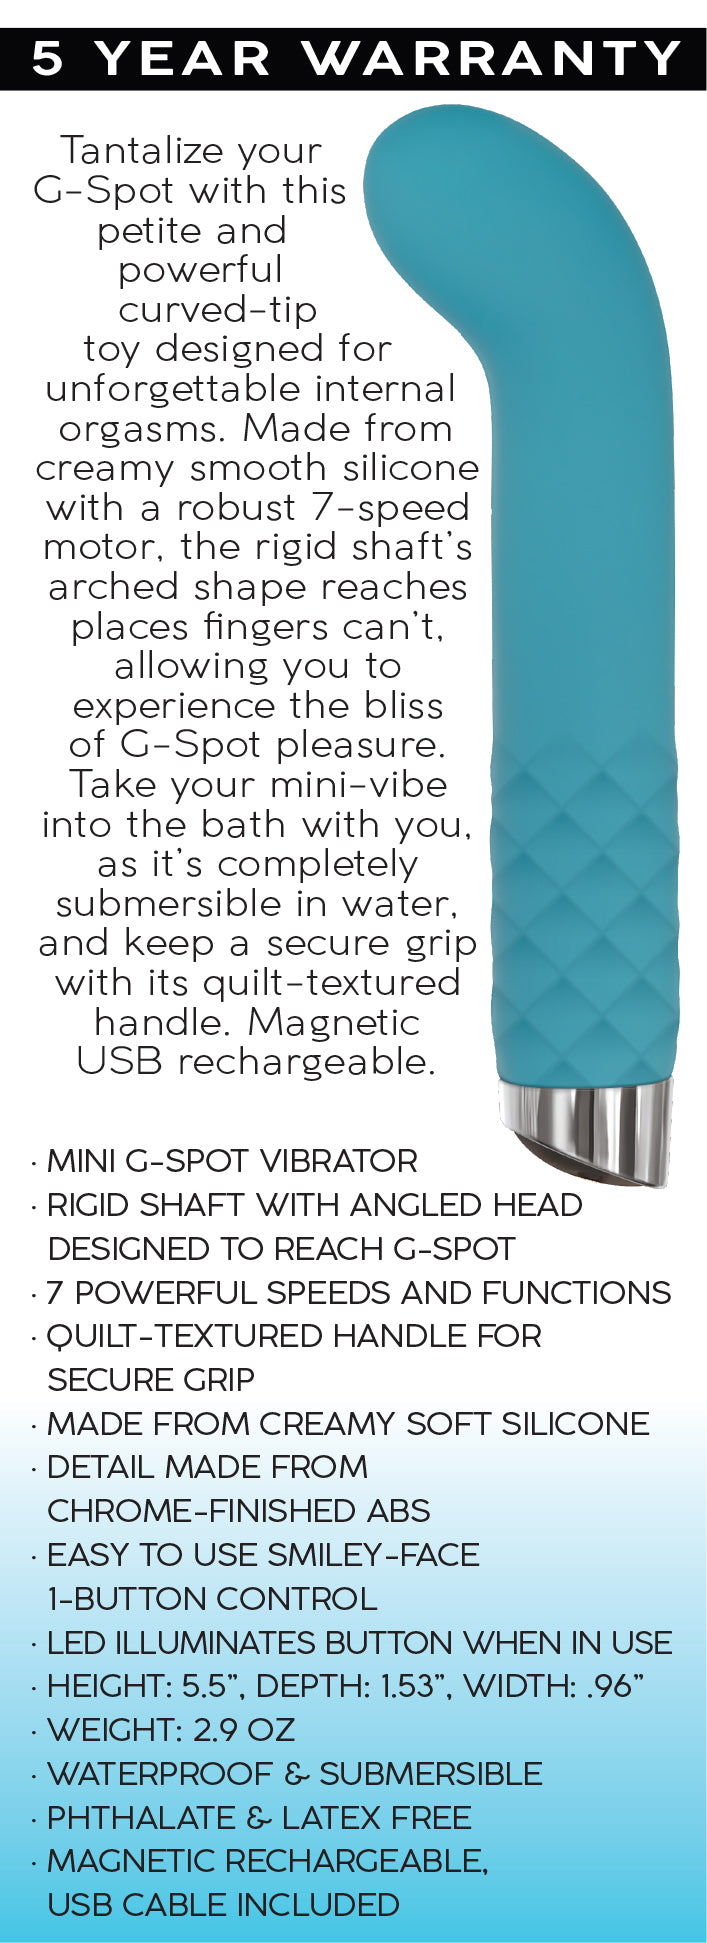 Intrigue The Admirer Mini G-Spot Vibe